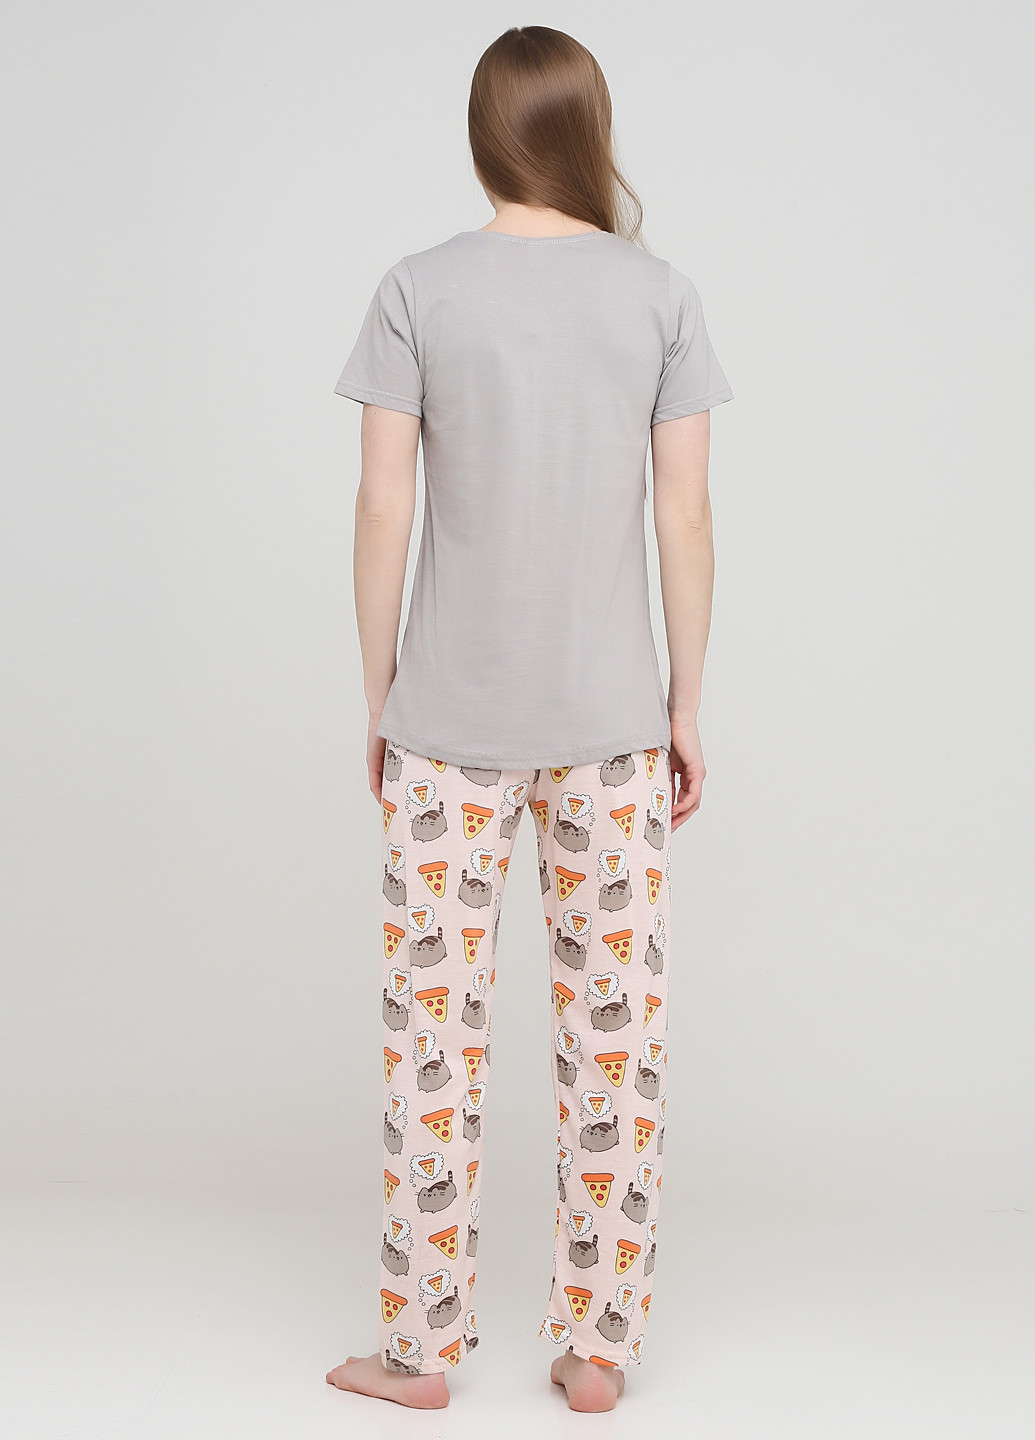 Сіро-бежева всесезон піжама (футболка, штани) футболка + штани Boyraz